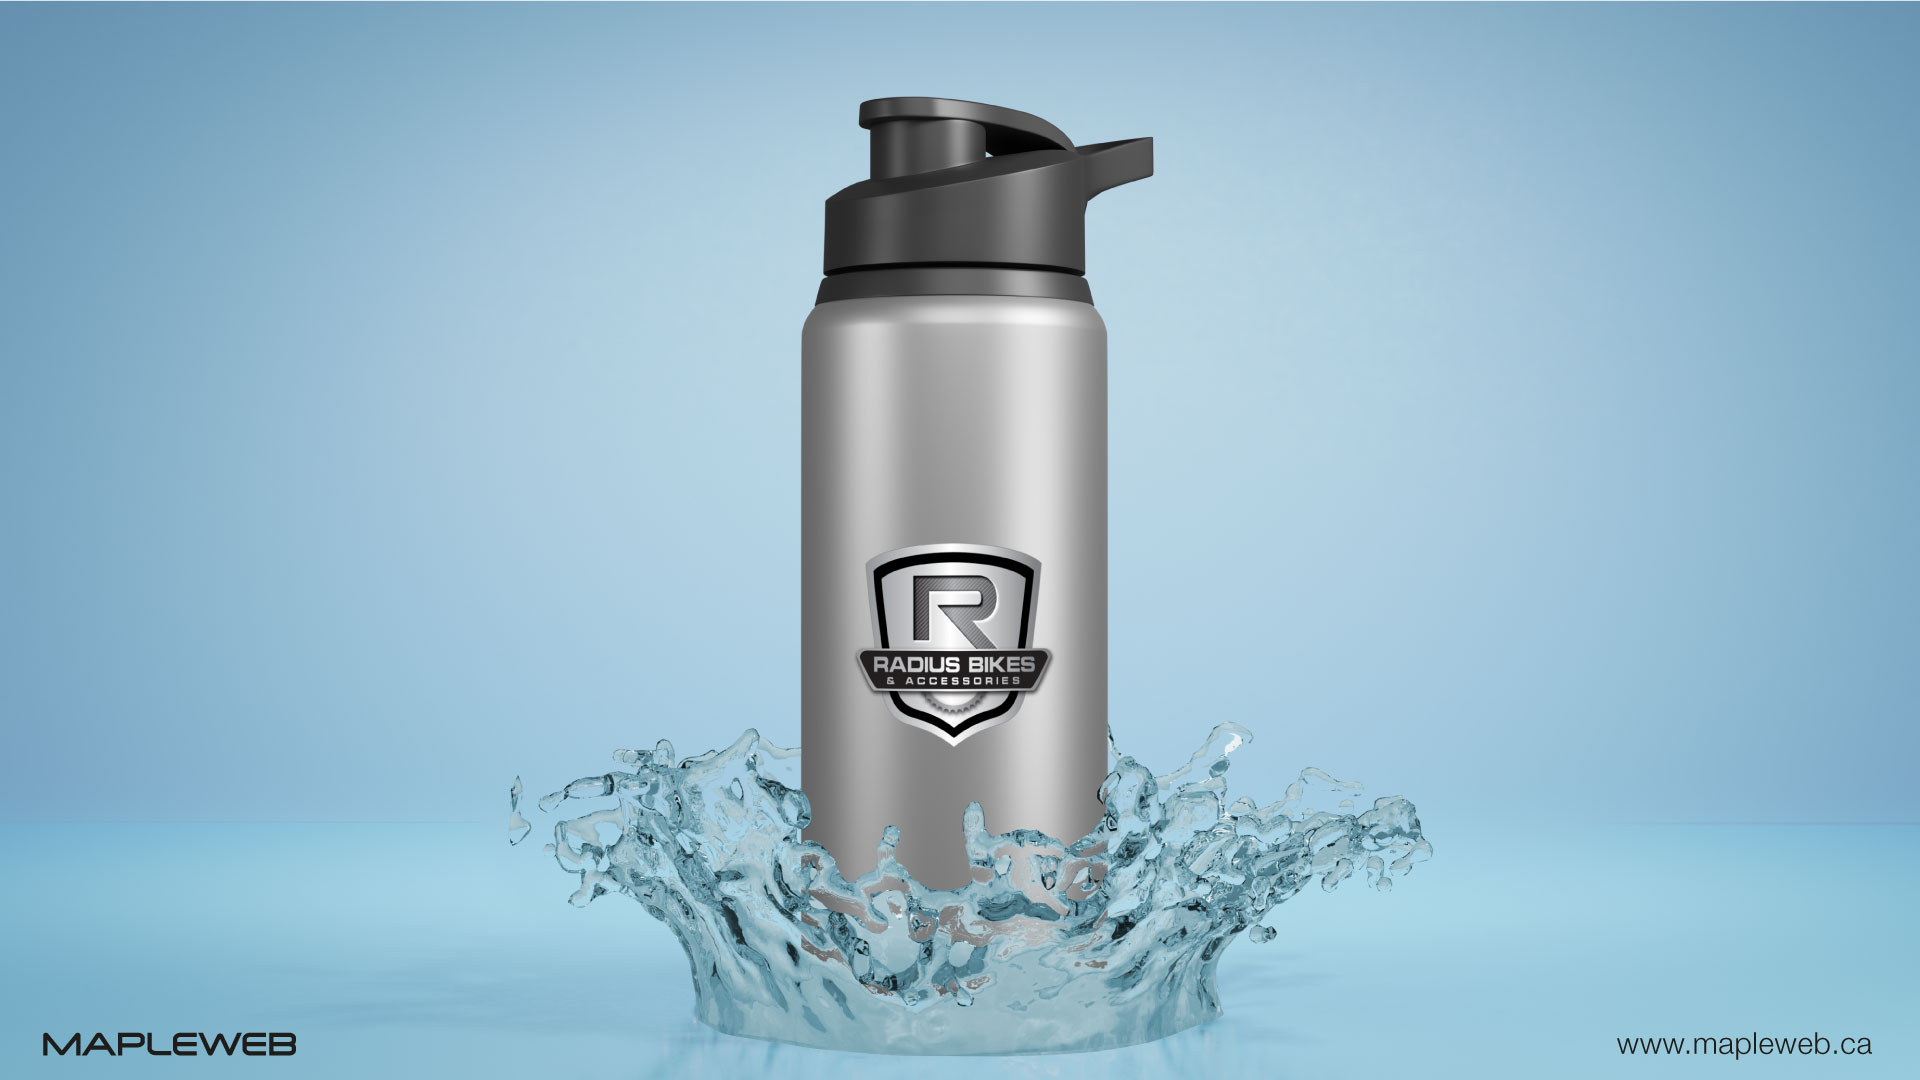 radius-bikes-brand-logo-design-by-mapleweb-vancouver-canada-water-bottle-mock